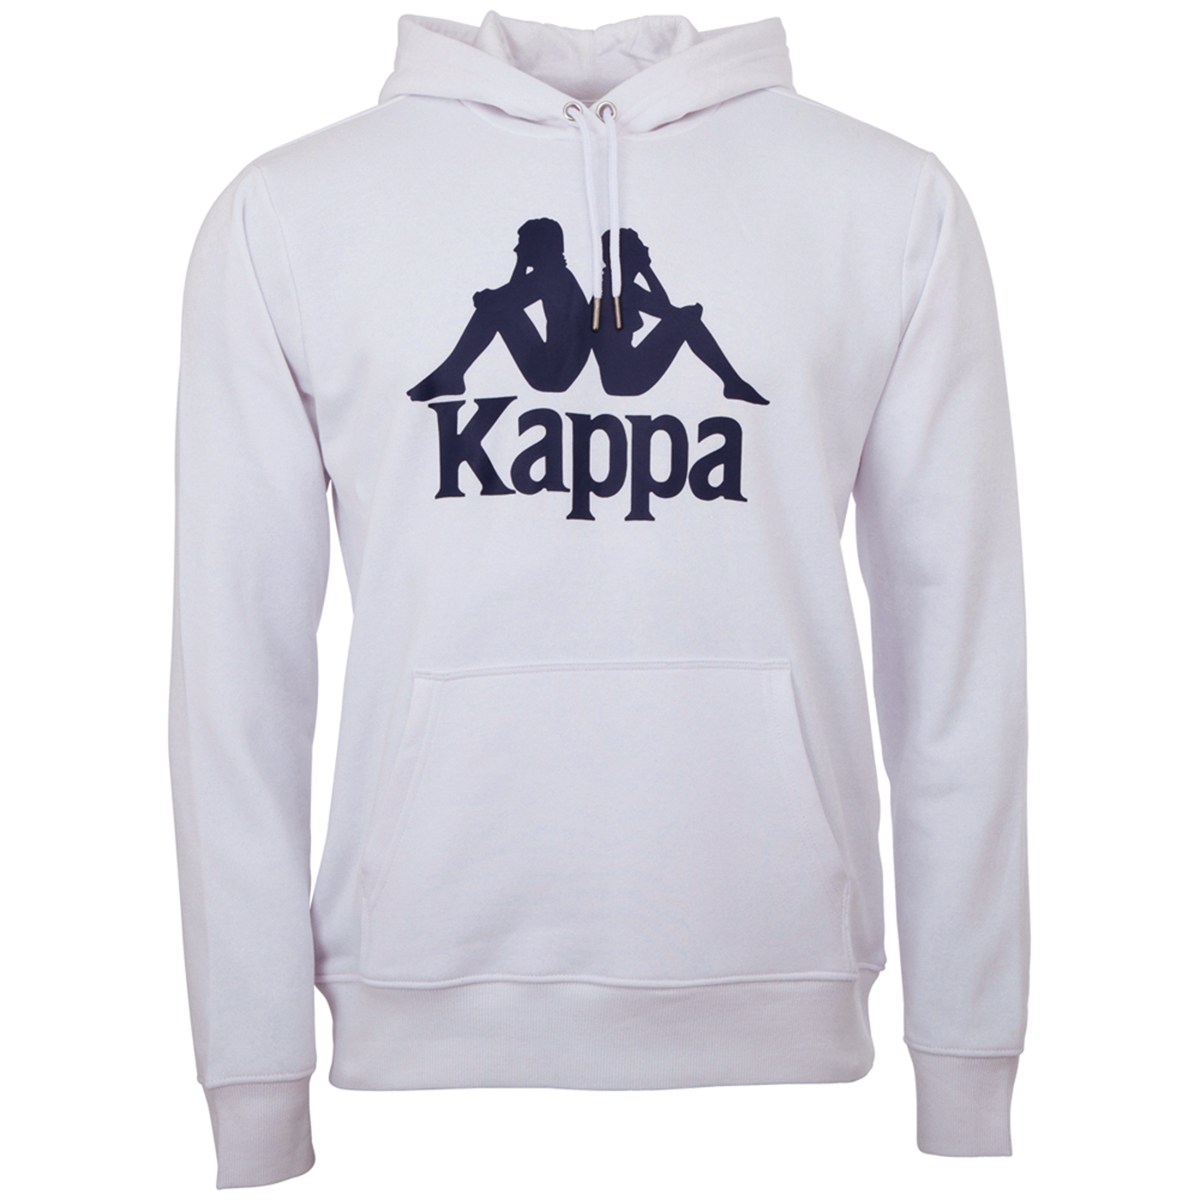 Kappa Unisex Hooded Sweatshirt white 705322 001 von Kappa